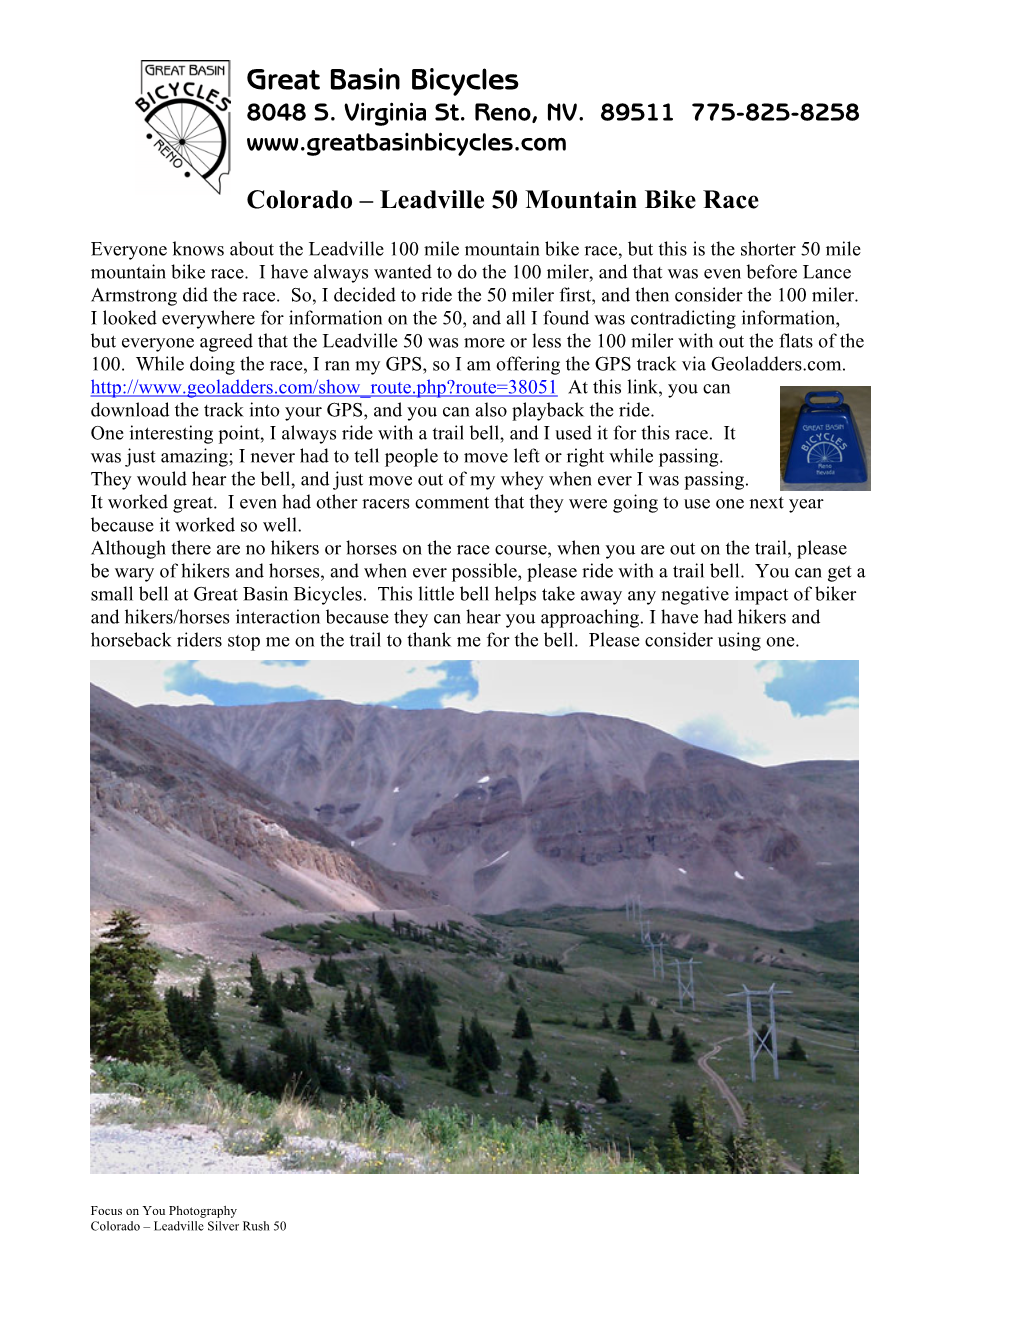 Leadville Silver Rush 50 Colorado – Leadville Silver Rush 50 Mile Mountain Bike Race (Black Trail) (Advanced) 46.30 Miles 7694 Ft